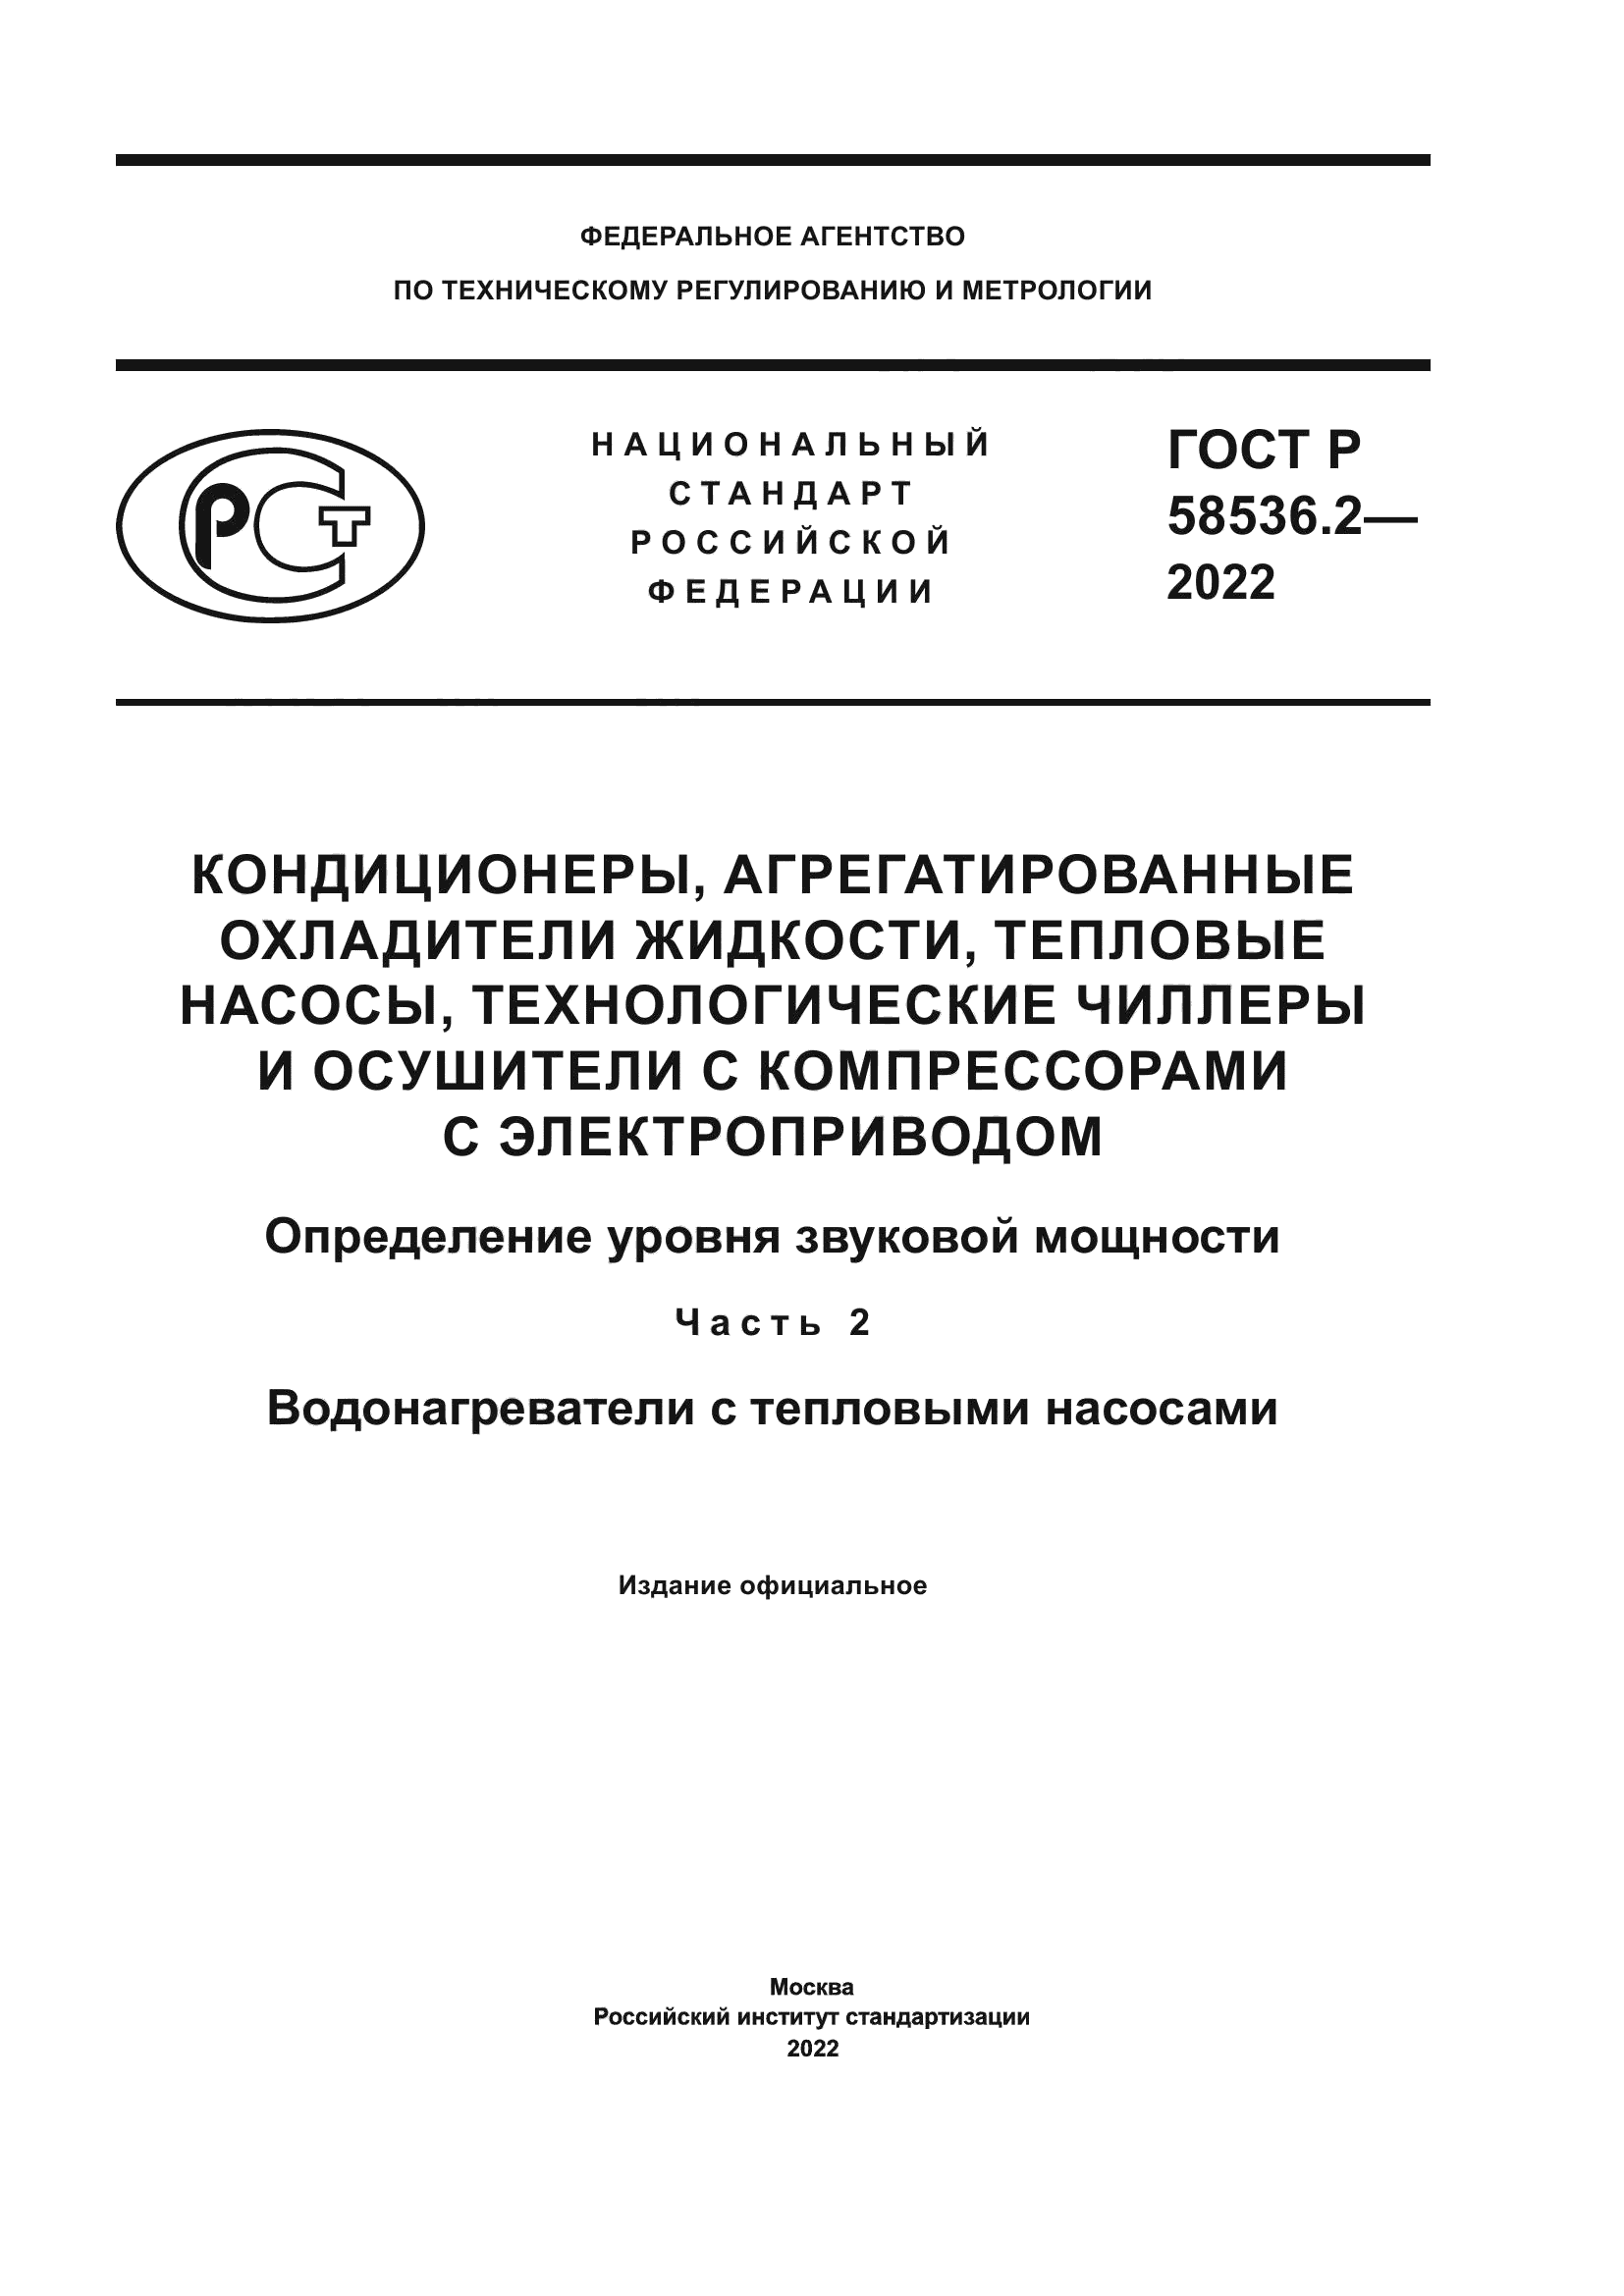 ГОСТ Р 58536.2-2022